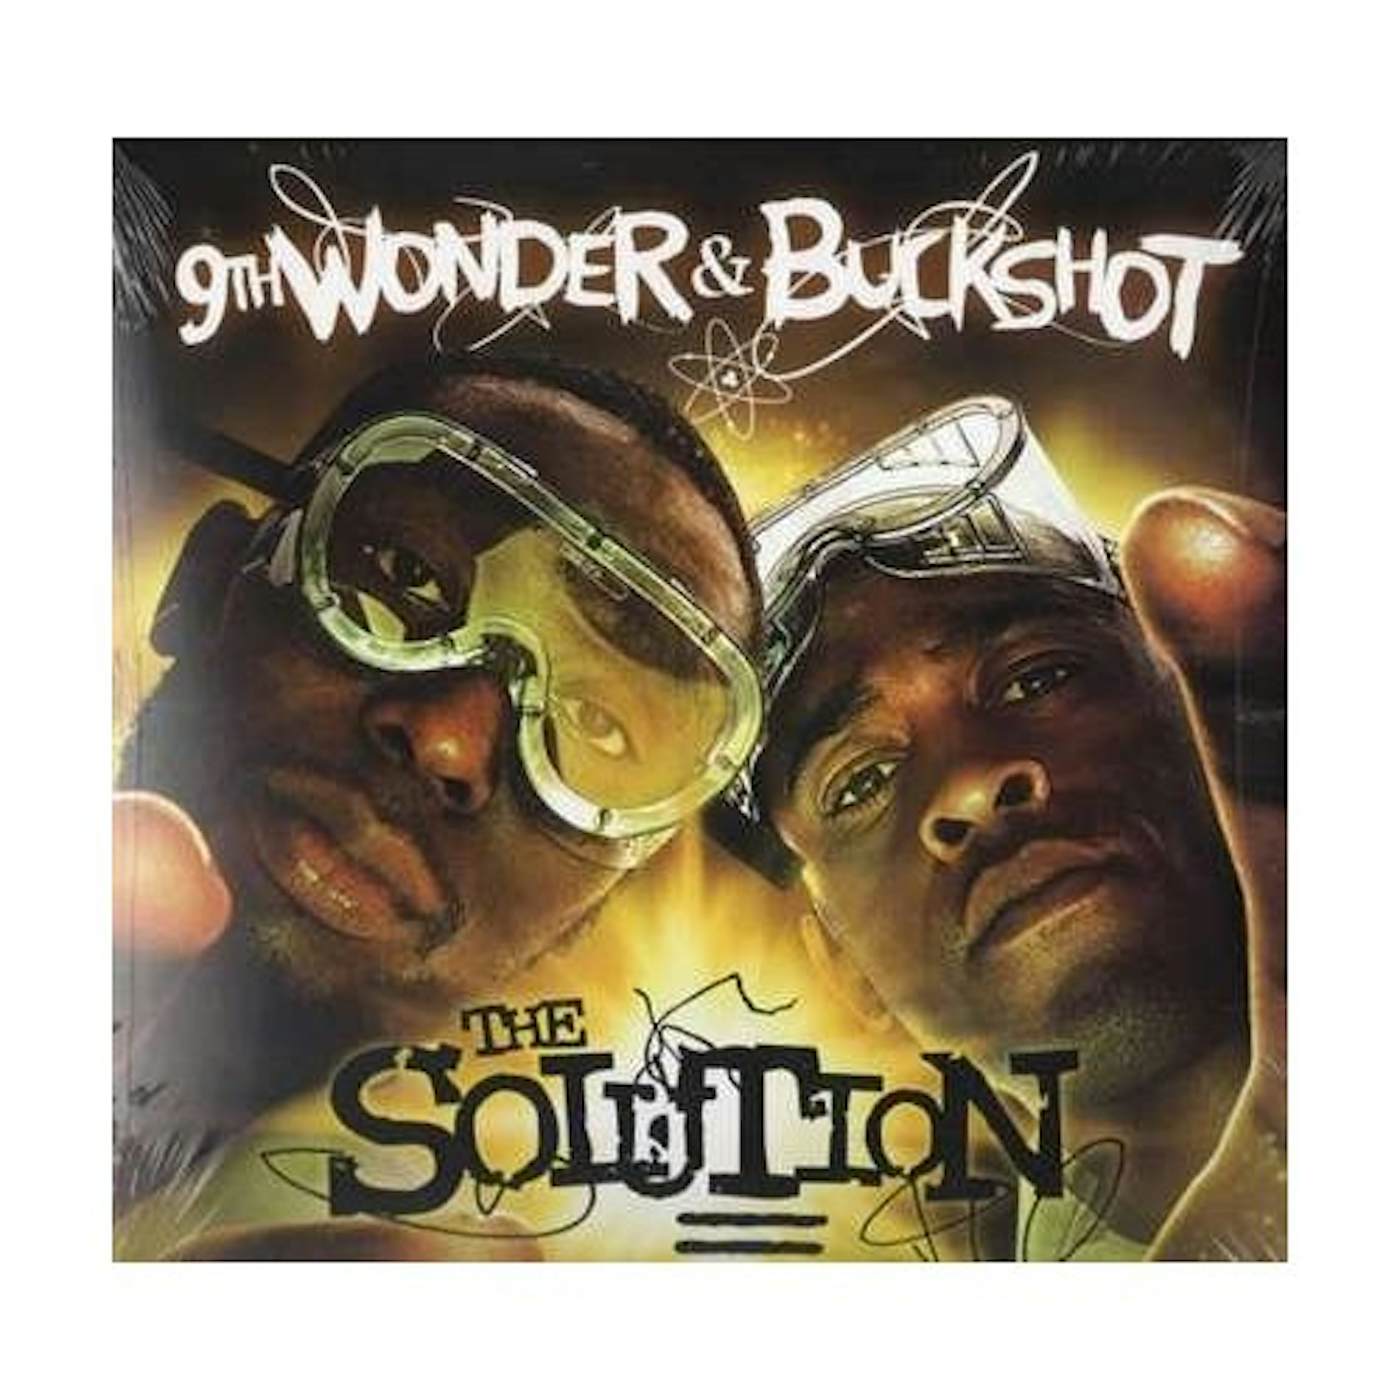 9th Wonder & Buckshot SOLUTION Vinyl Record - Deluxe Edition